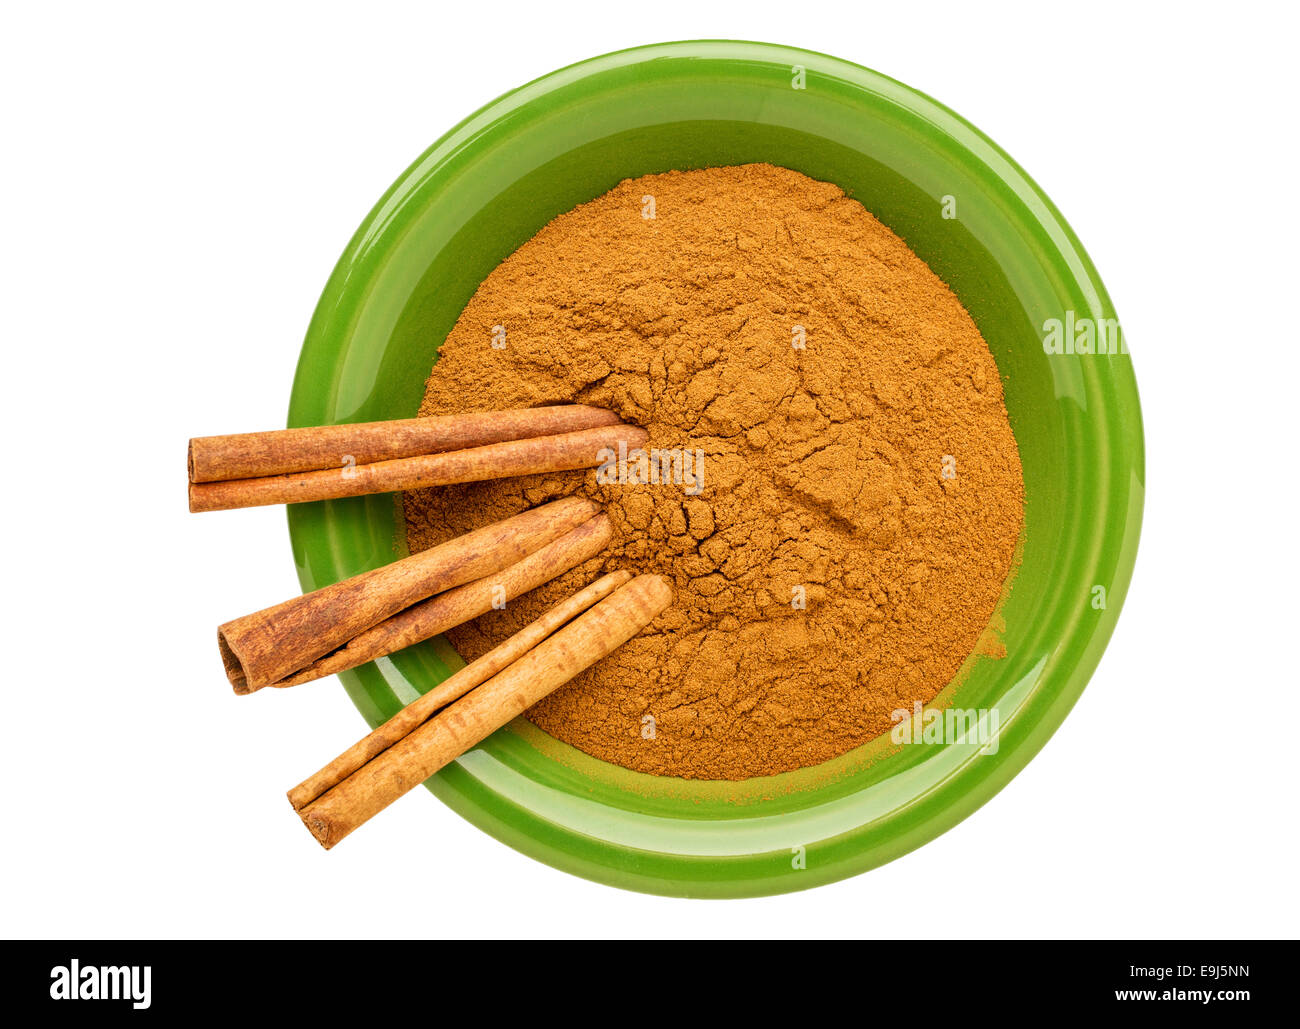 cinnamon  (cassia)  bark powder and sticks on an isolated green ceramic bowl Stock Photo